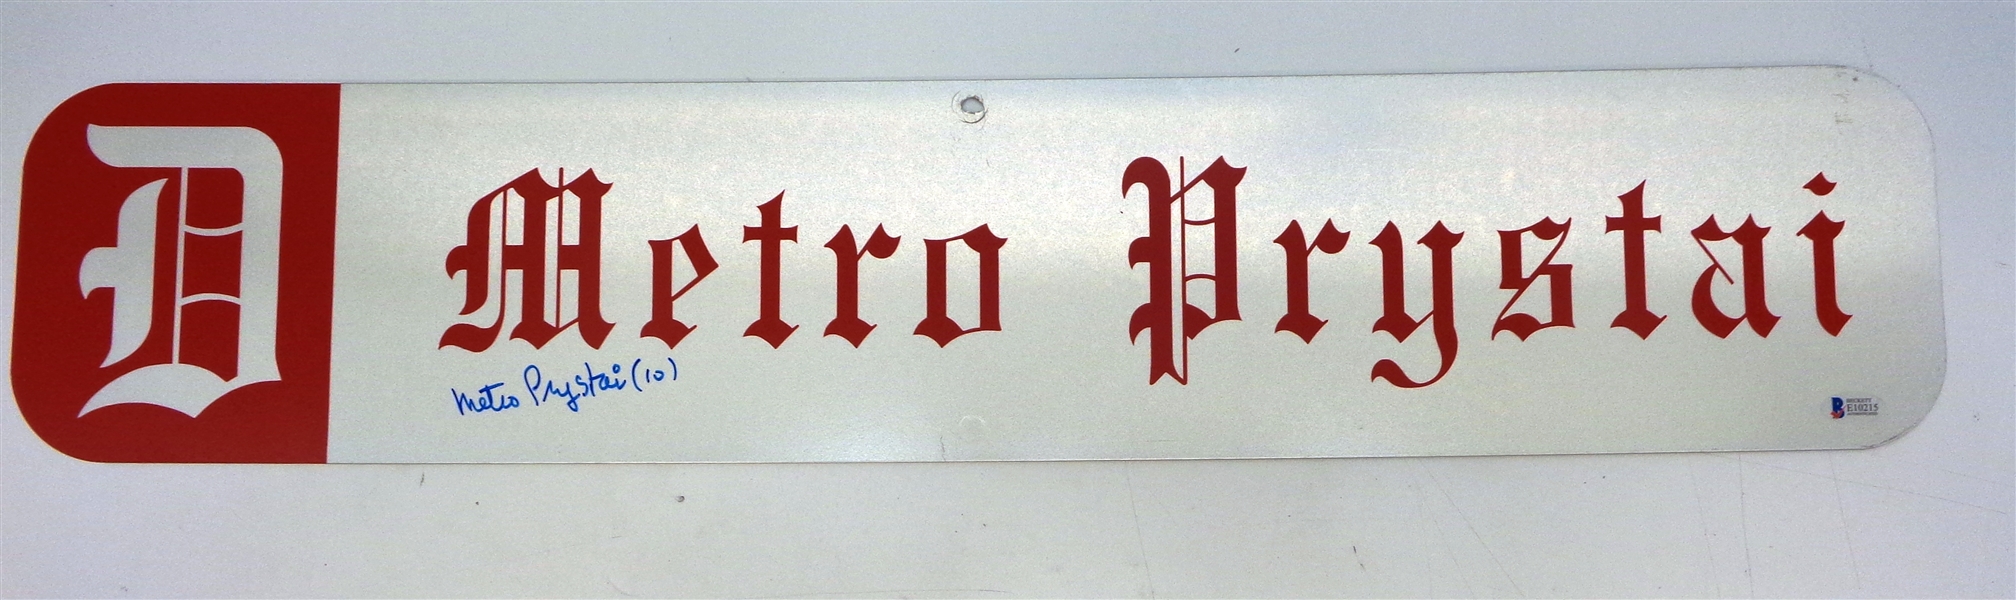 Metro Prystai Autographed Custom 6x30 Street Sign